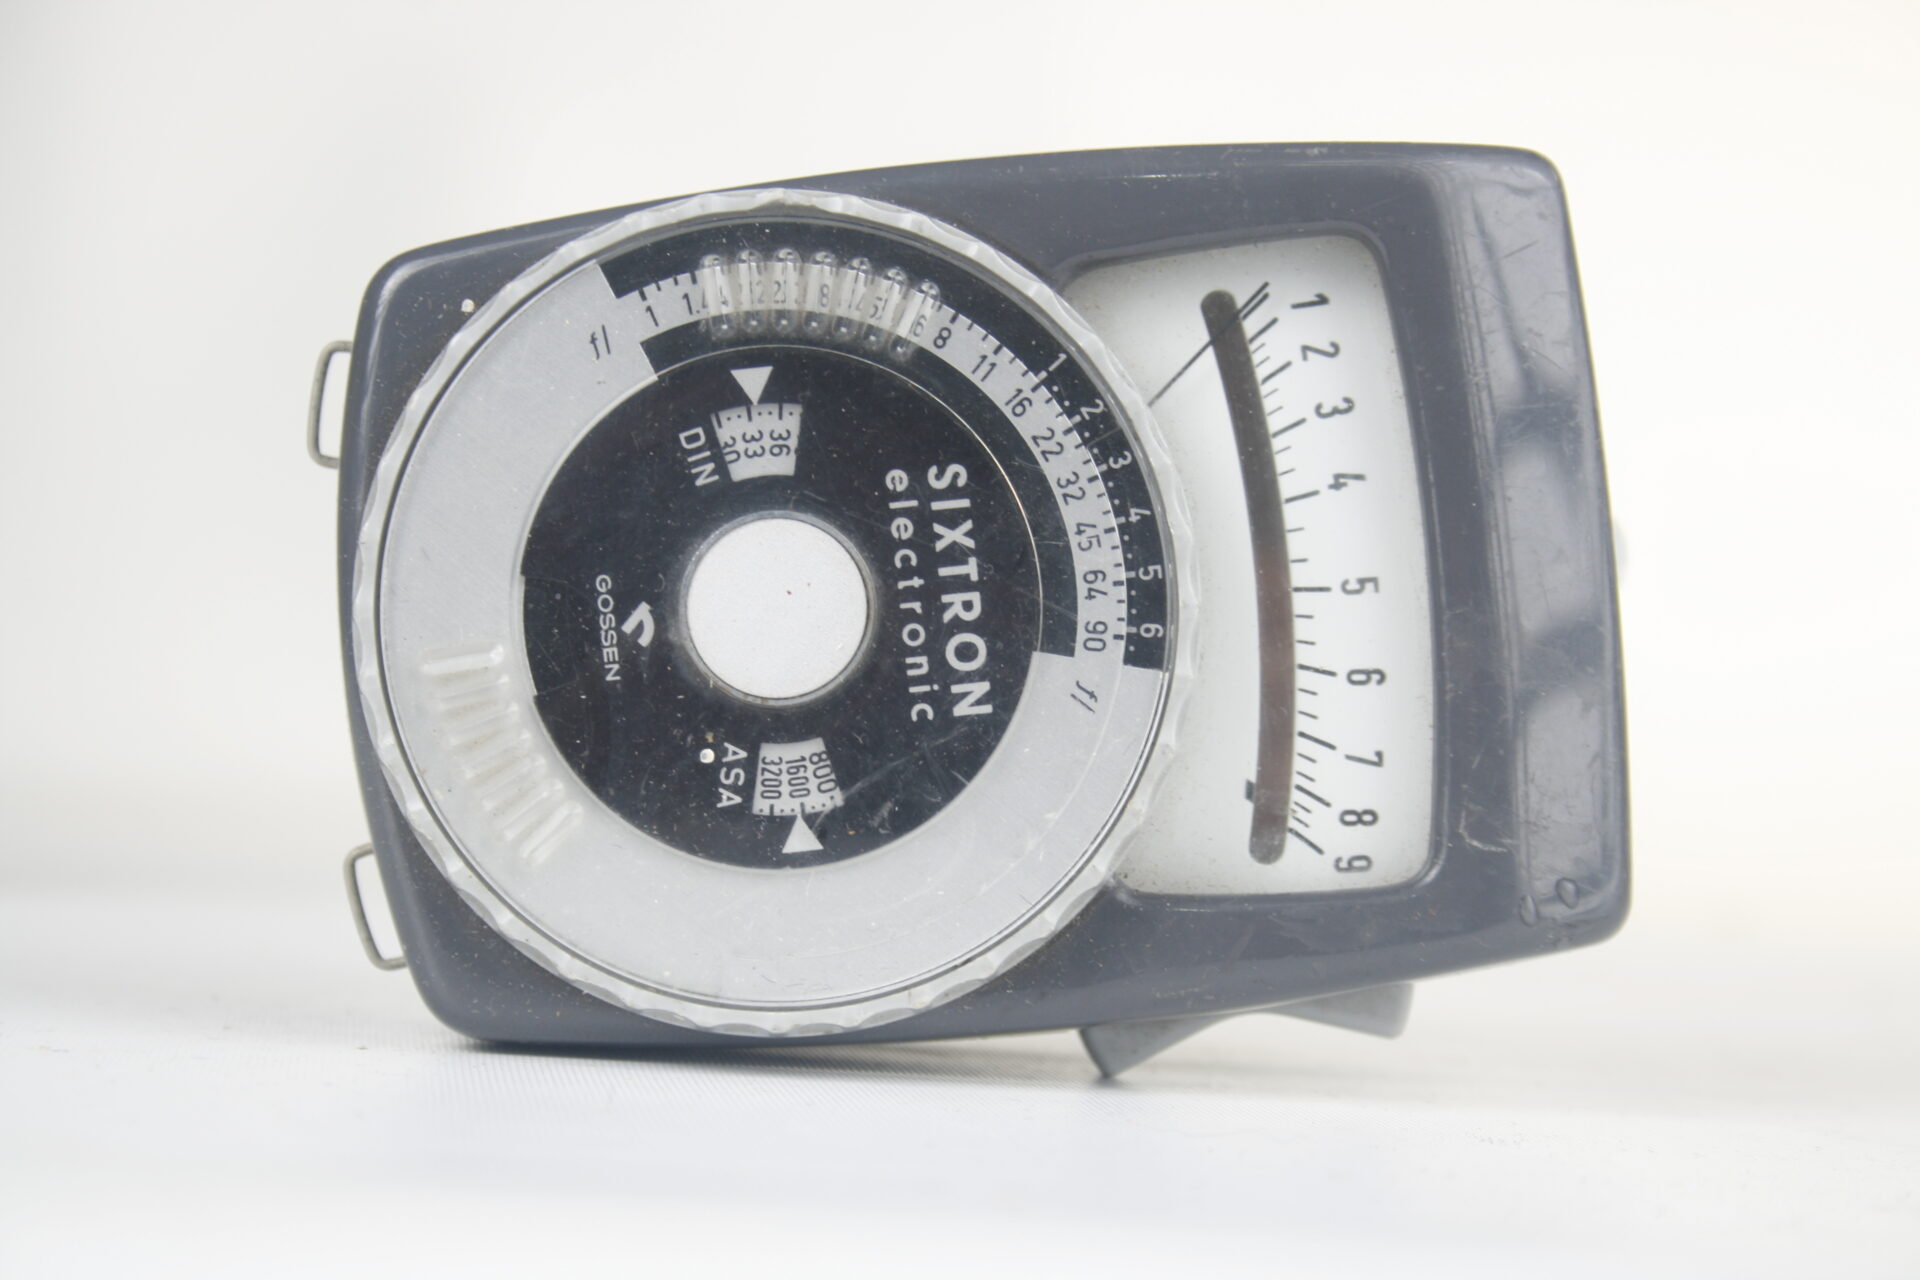 Gossen Sixtron Electronic (Ascor USA). Photodiode sensor. F1-90. 1968. Duitsland